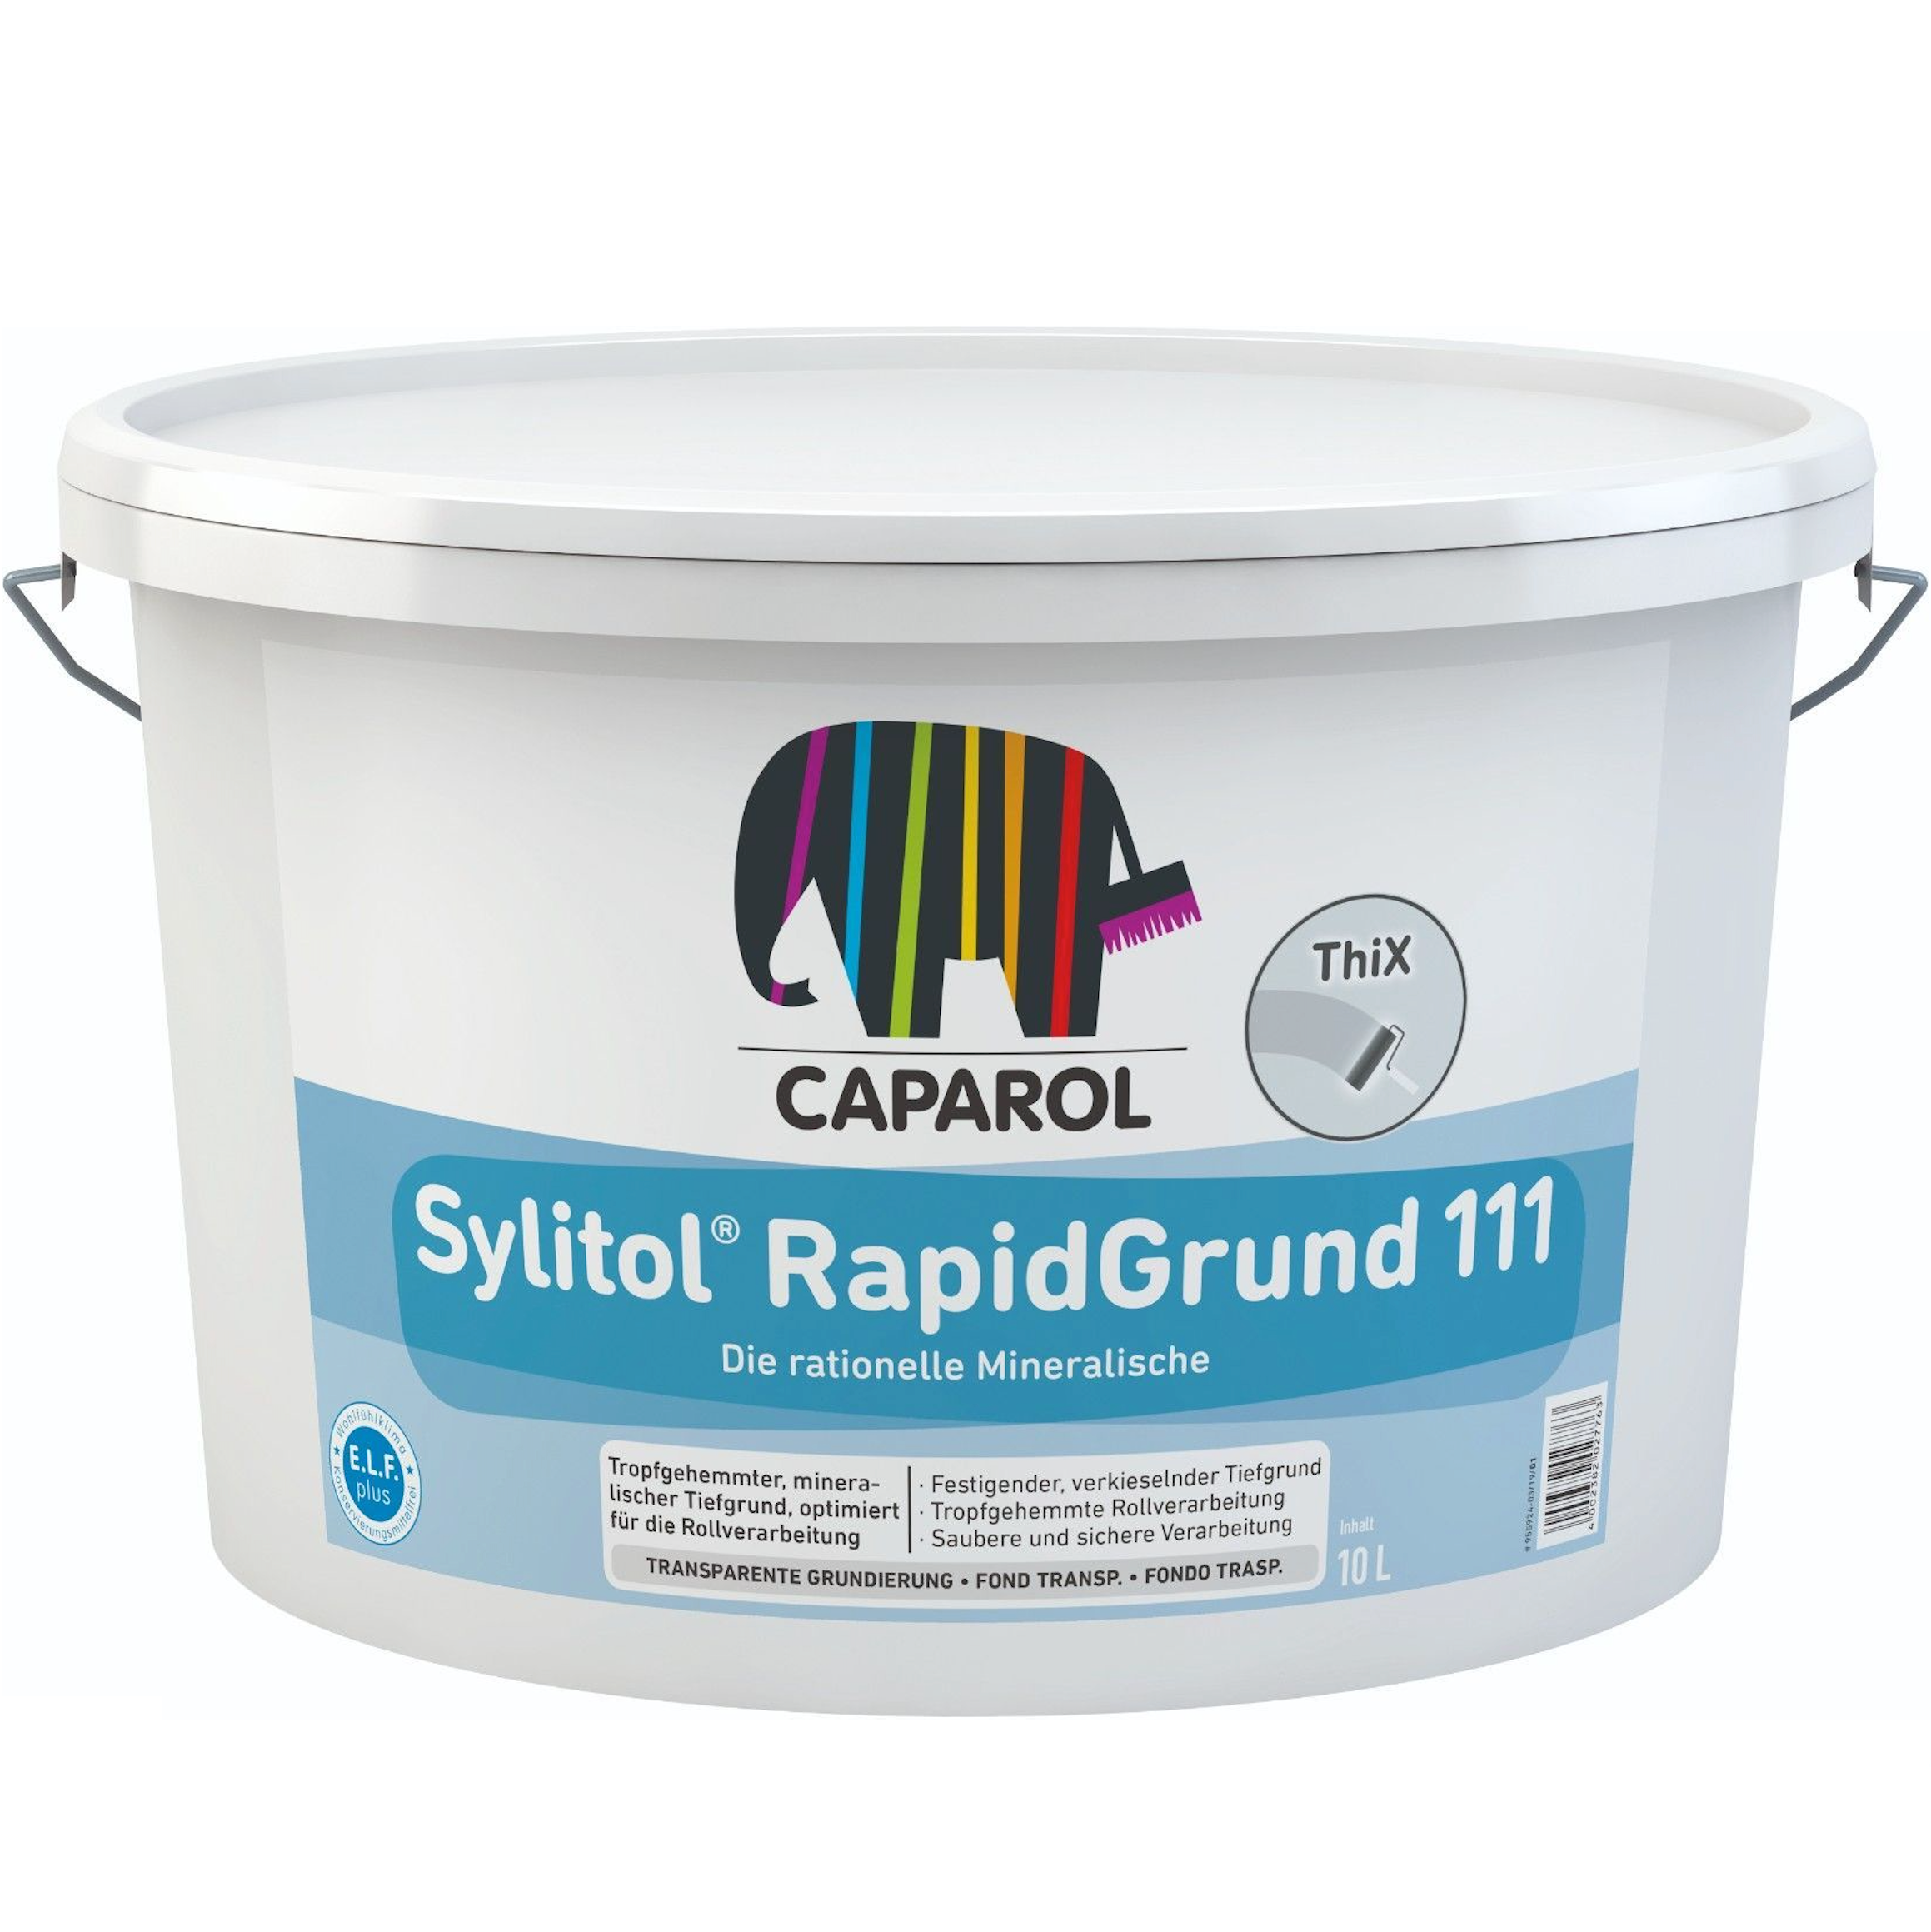 Caparol Sylitol® RapidGrund 111